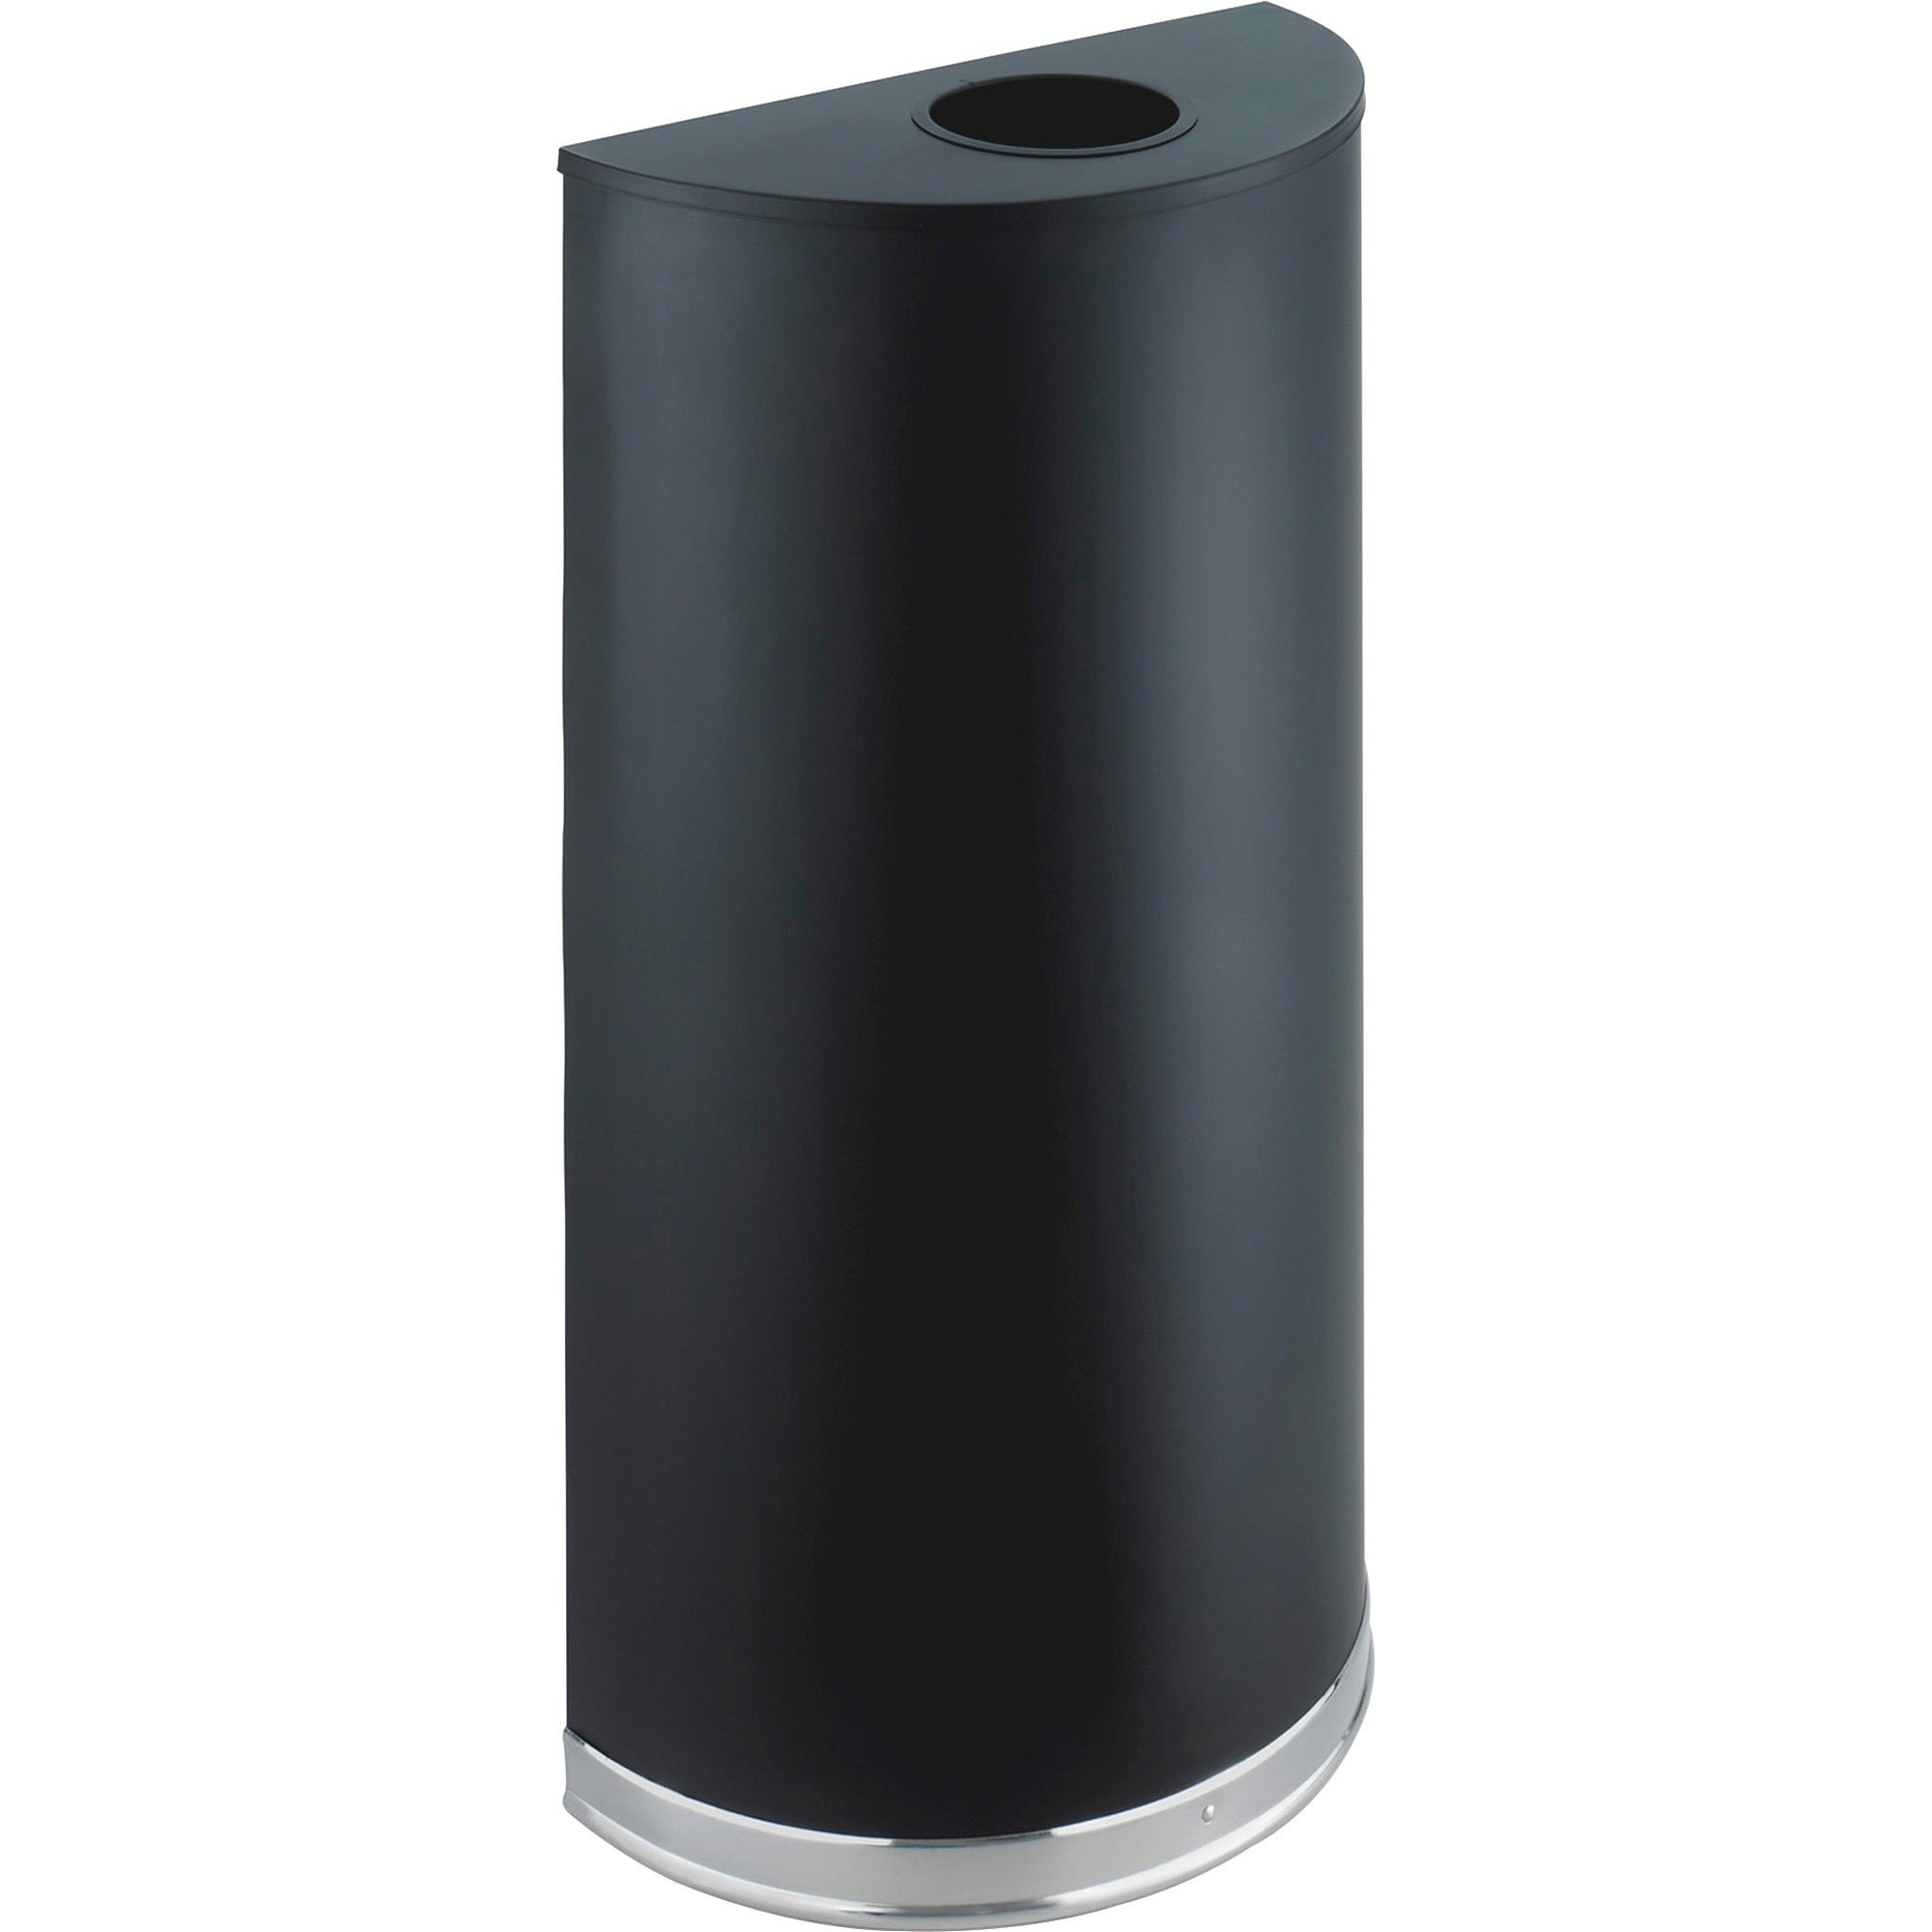 safco-half-round-receptacle-1250-gal-capacity-half-round-325-height-x-175-width-x-9-depth-steel-rubber-plastic-black-1-each_saf9940bl - 1